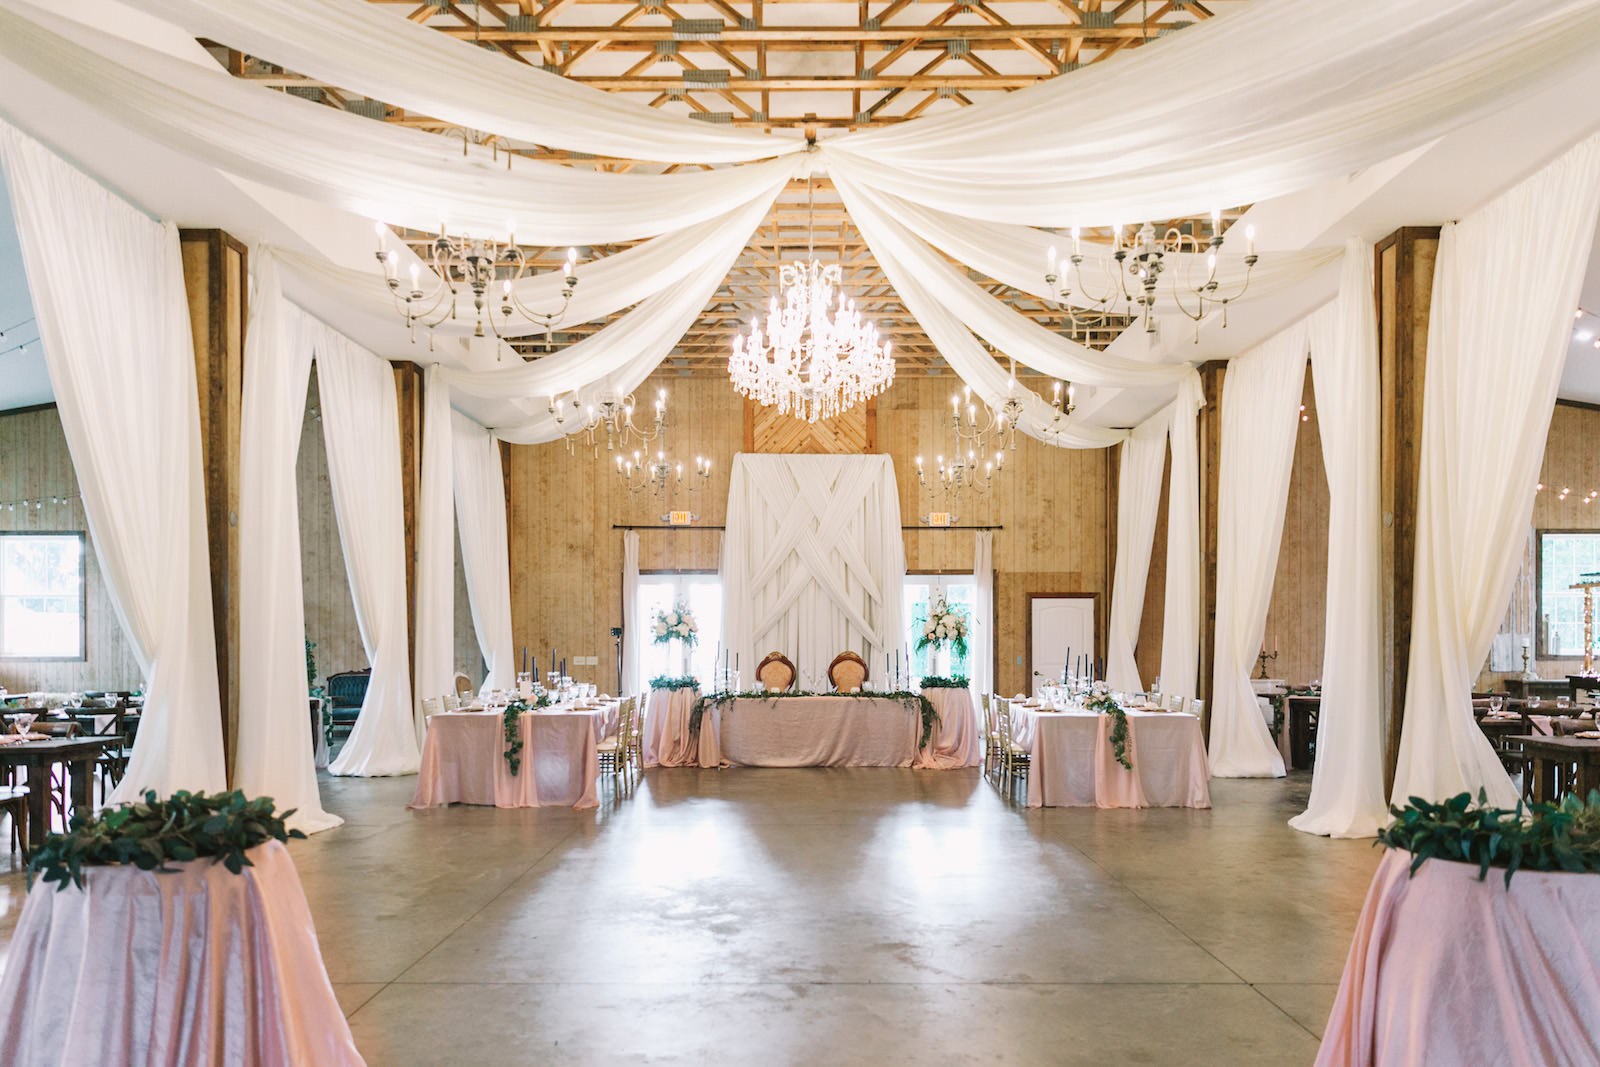 Barn Wedding with Blush Tablecloths and White Draping | Tampa Florida Reception Hall Covington Farms